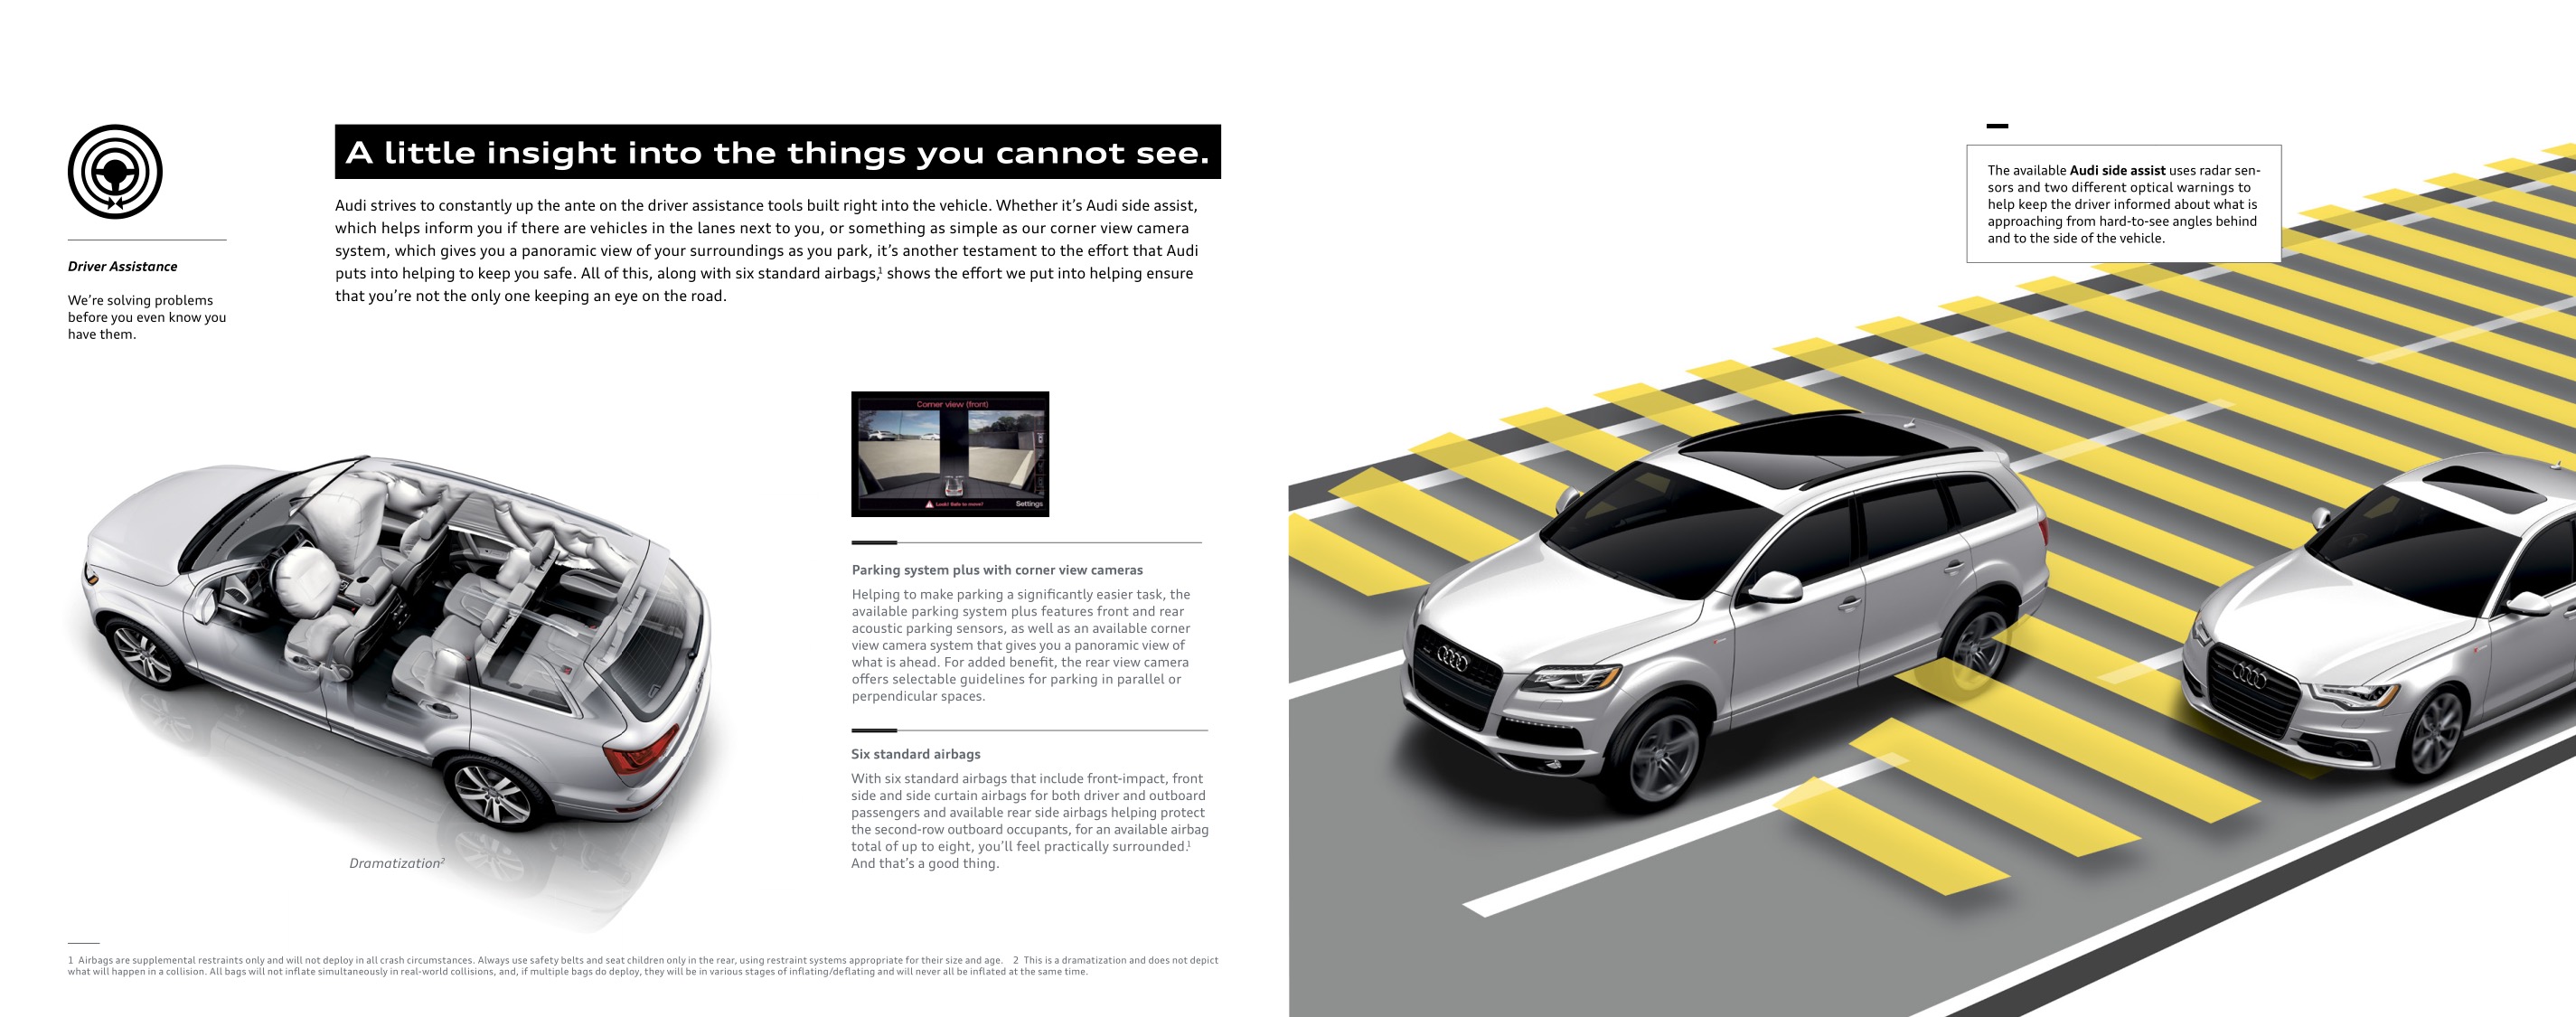 2015 Audi Q7 Brochure Page 6